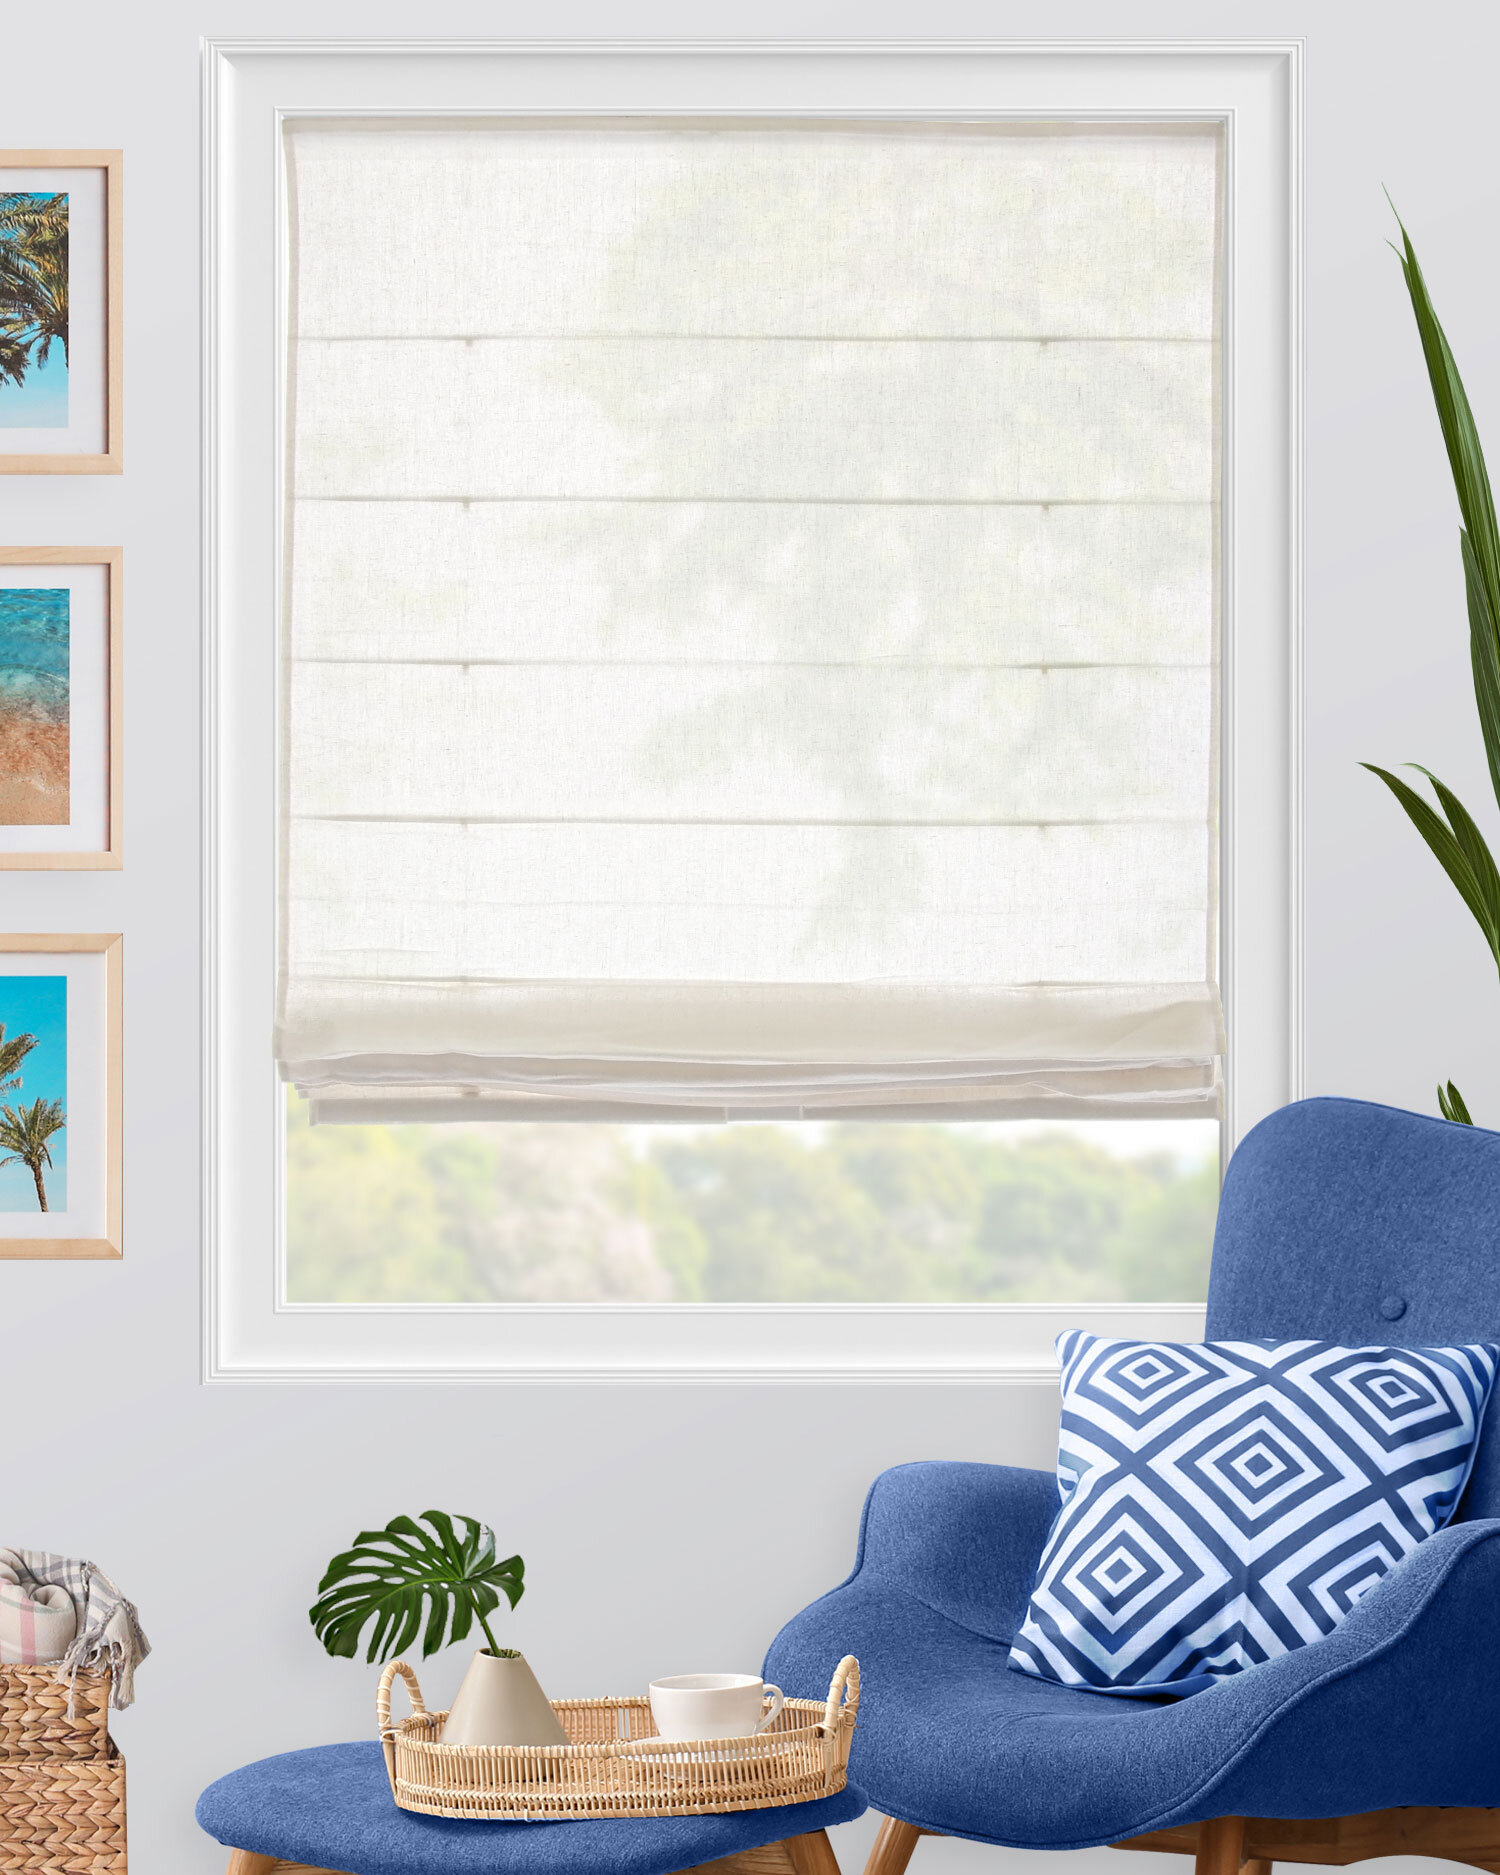 DIY Insulated Roman Shade window blanket using Warm Window backing